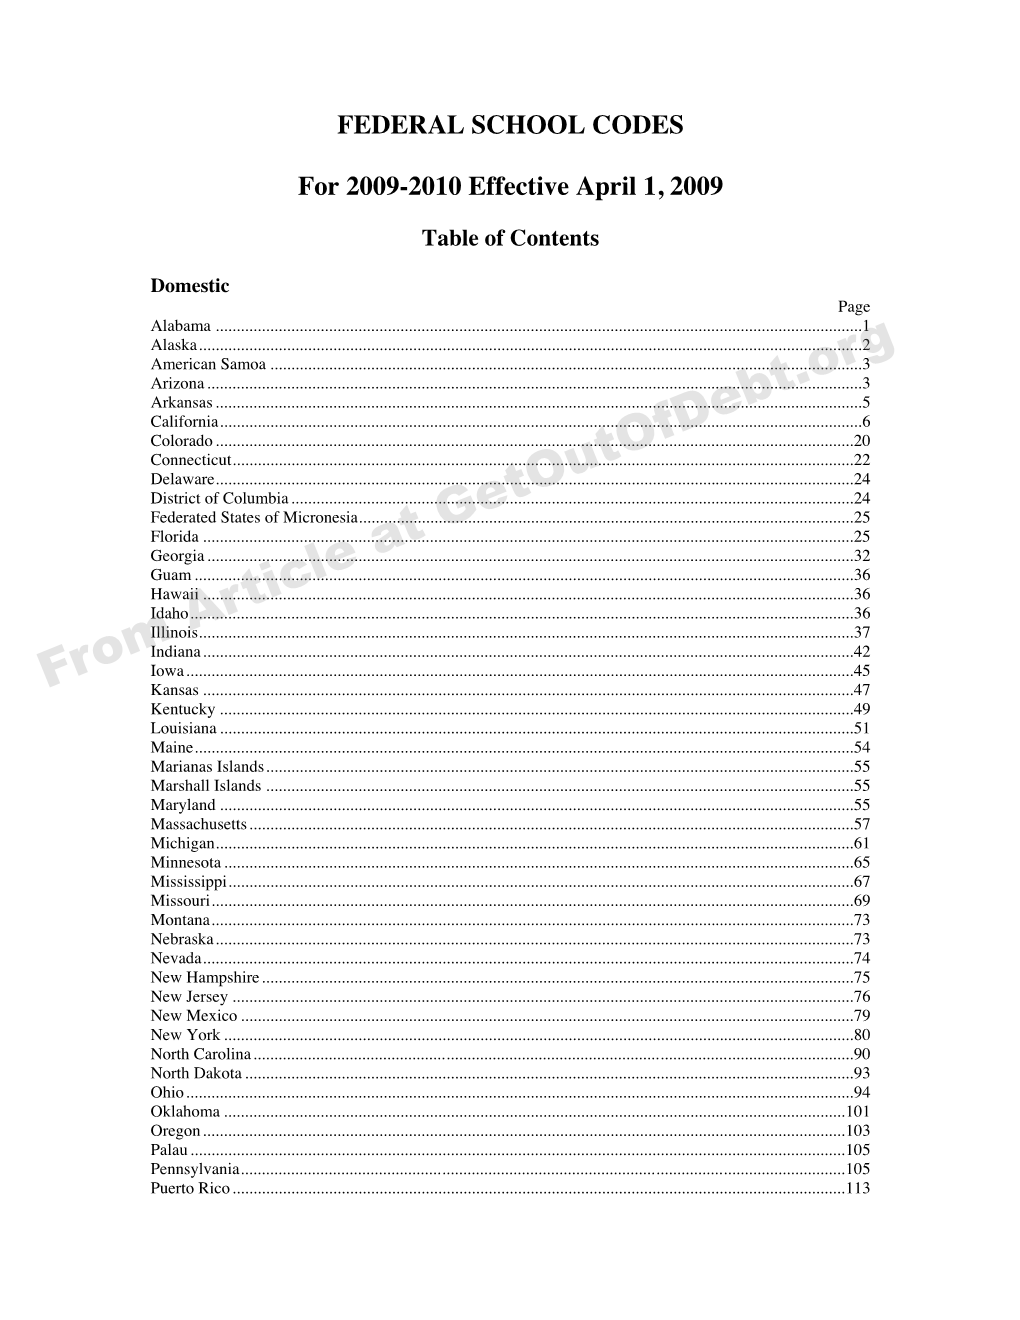 2009-2010 Federal School Code List